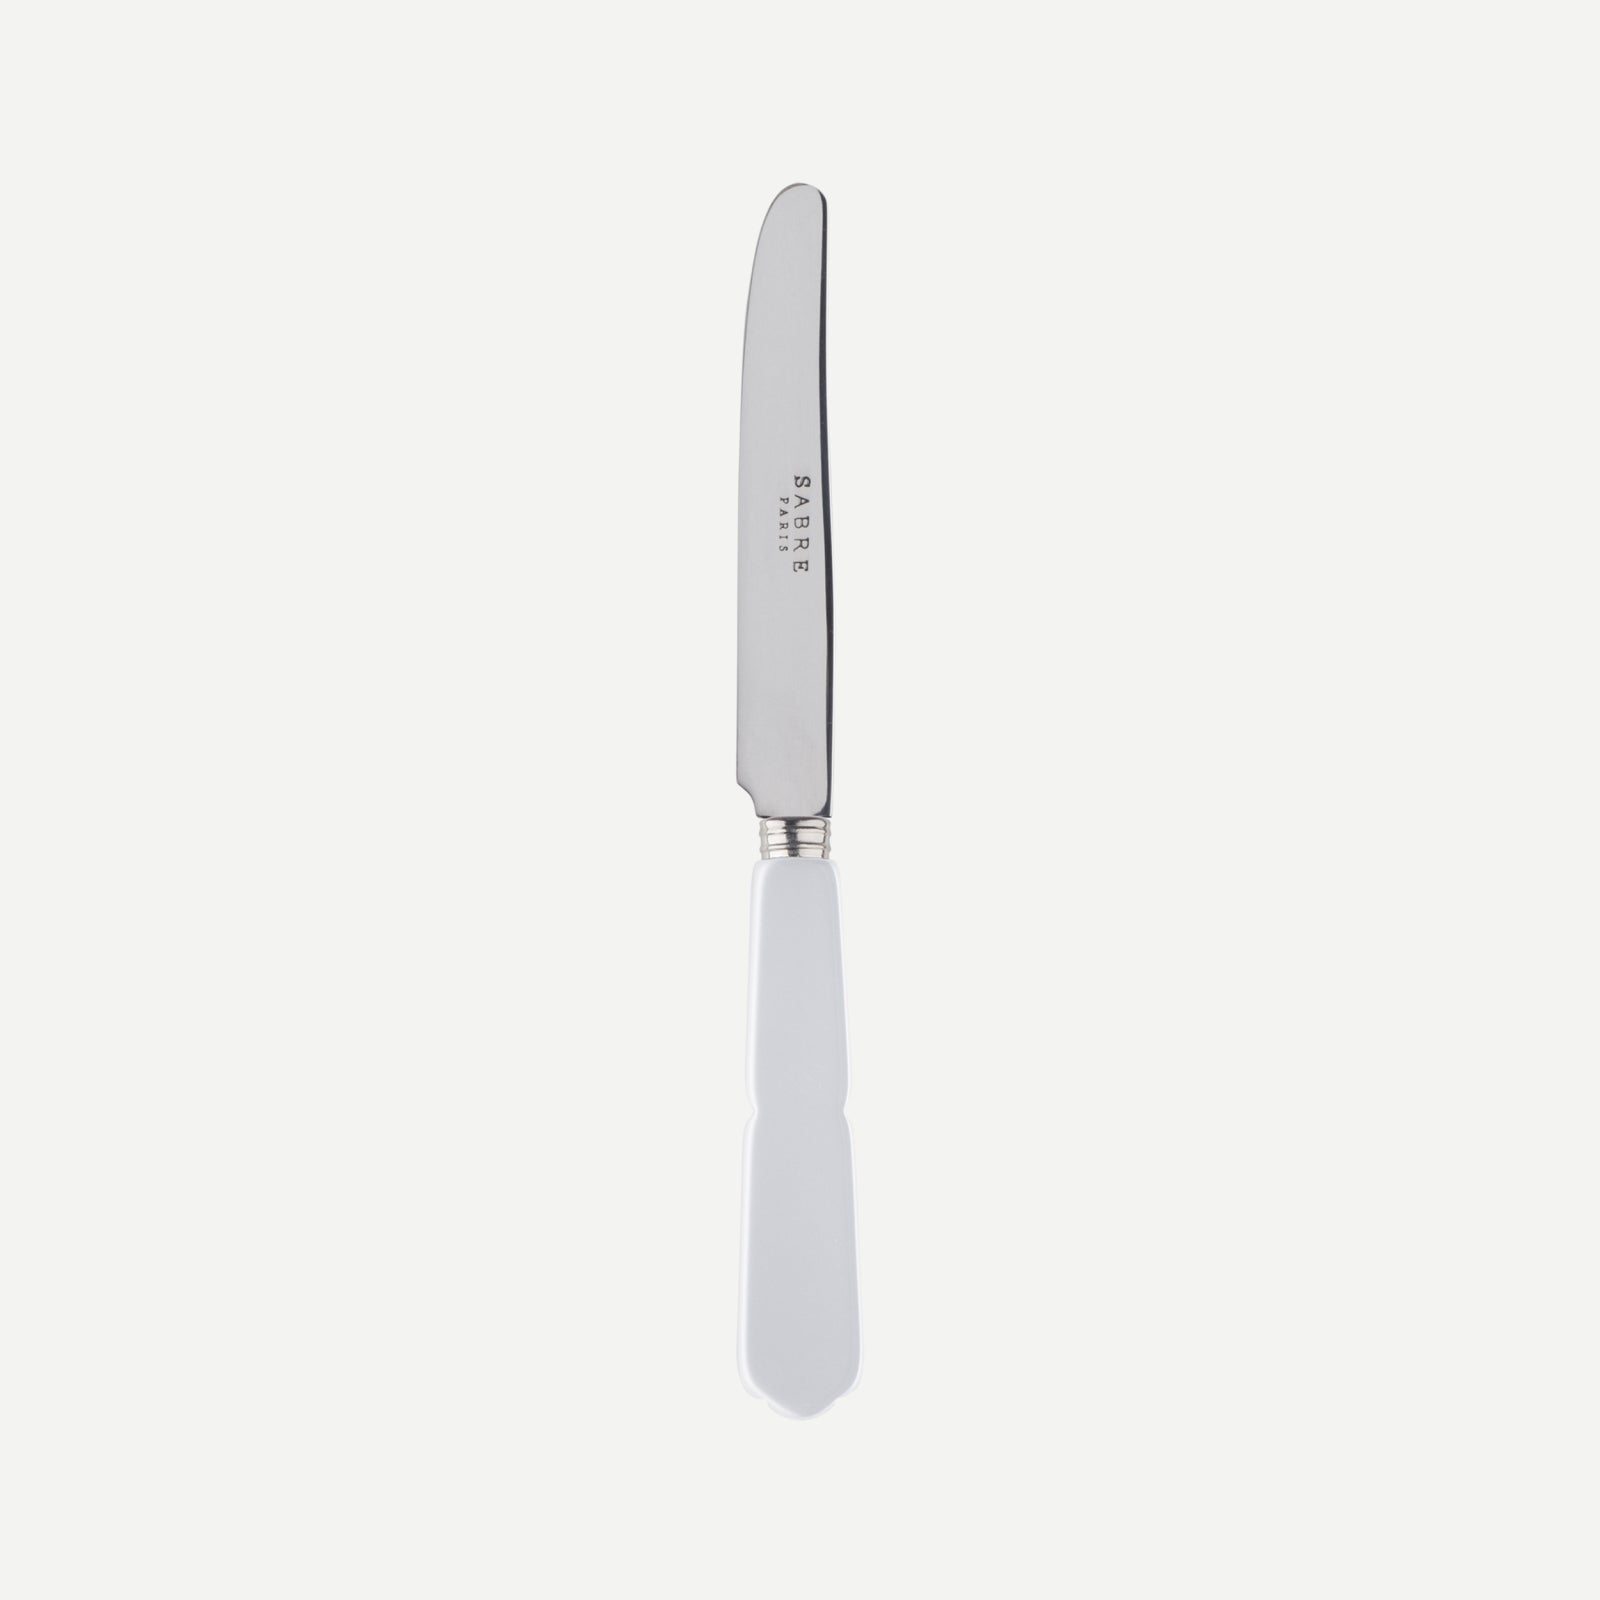 Breakfast knife - Gustave - White